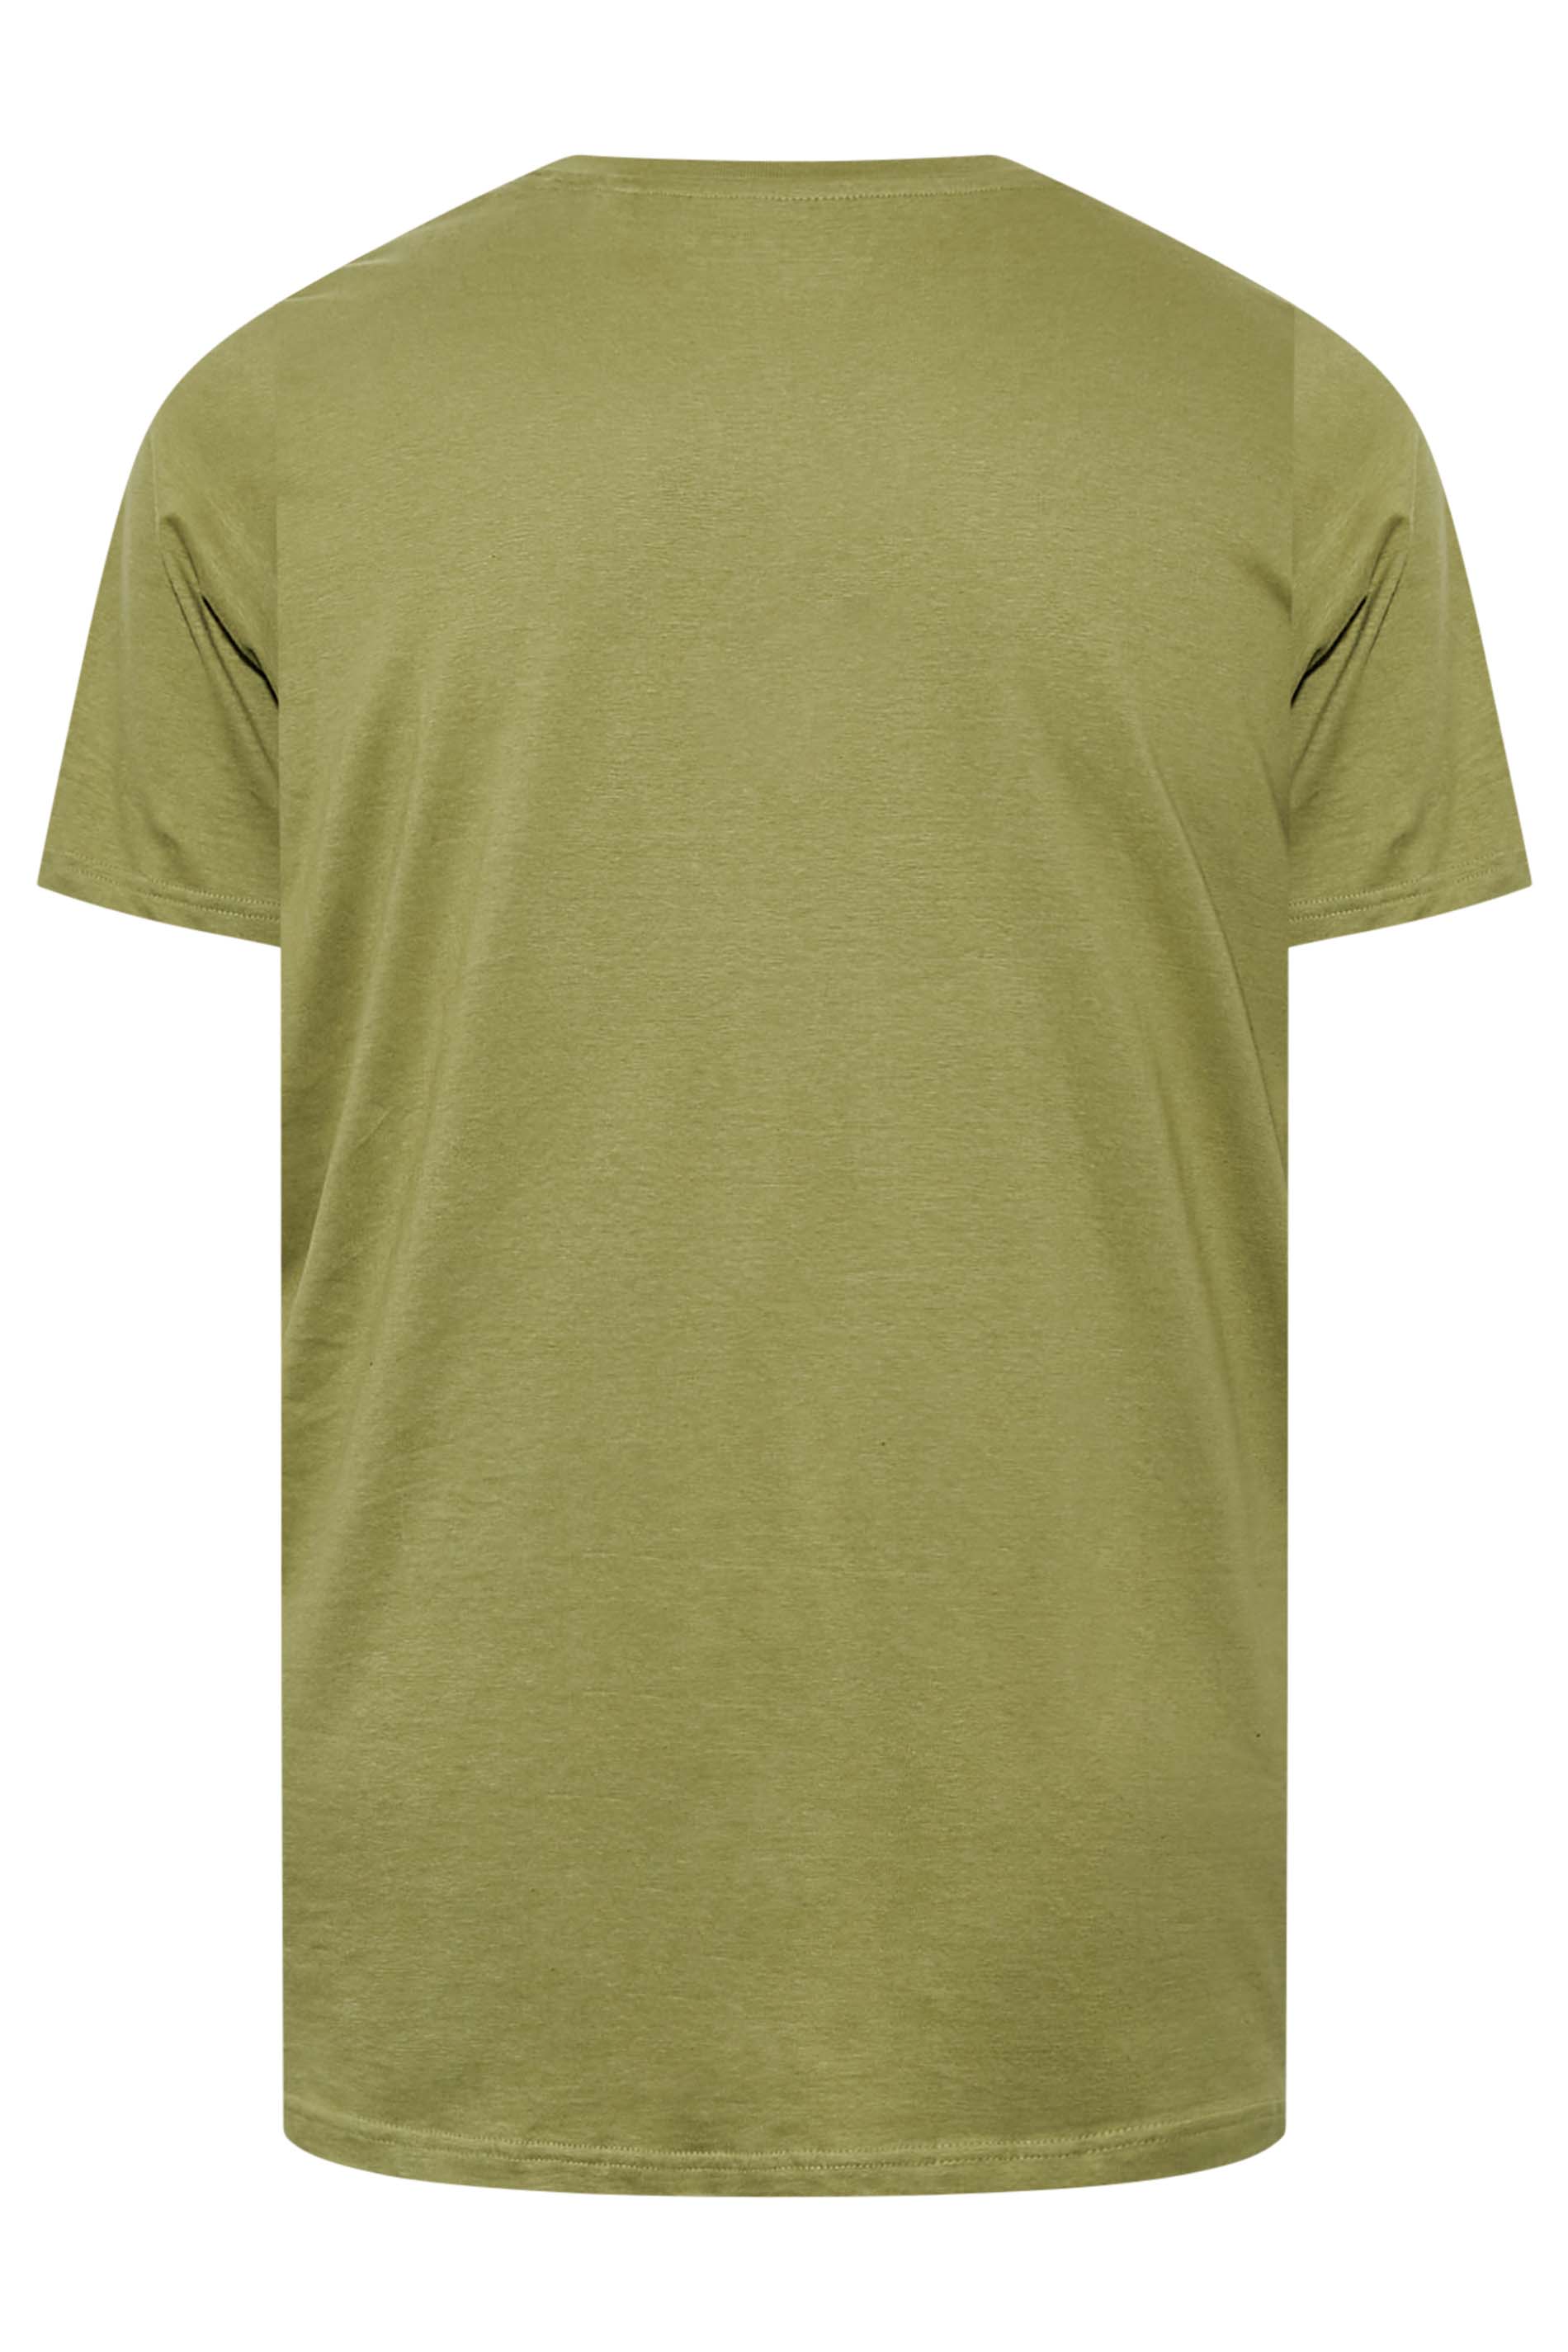 BadRhino Big & Tall Green Off Road T-Shirt | BadRhino 3